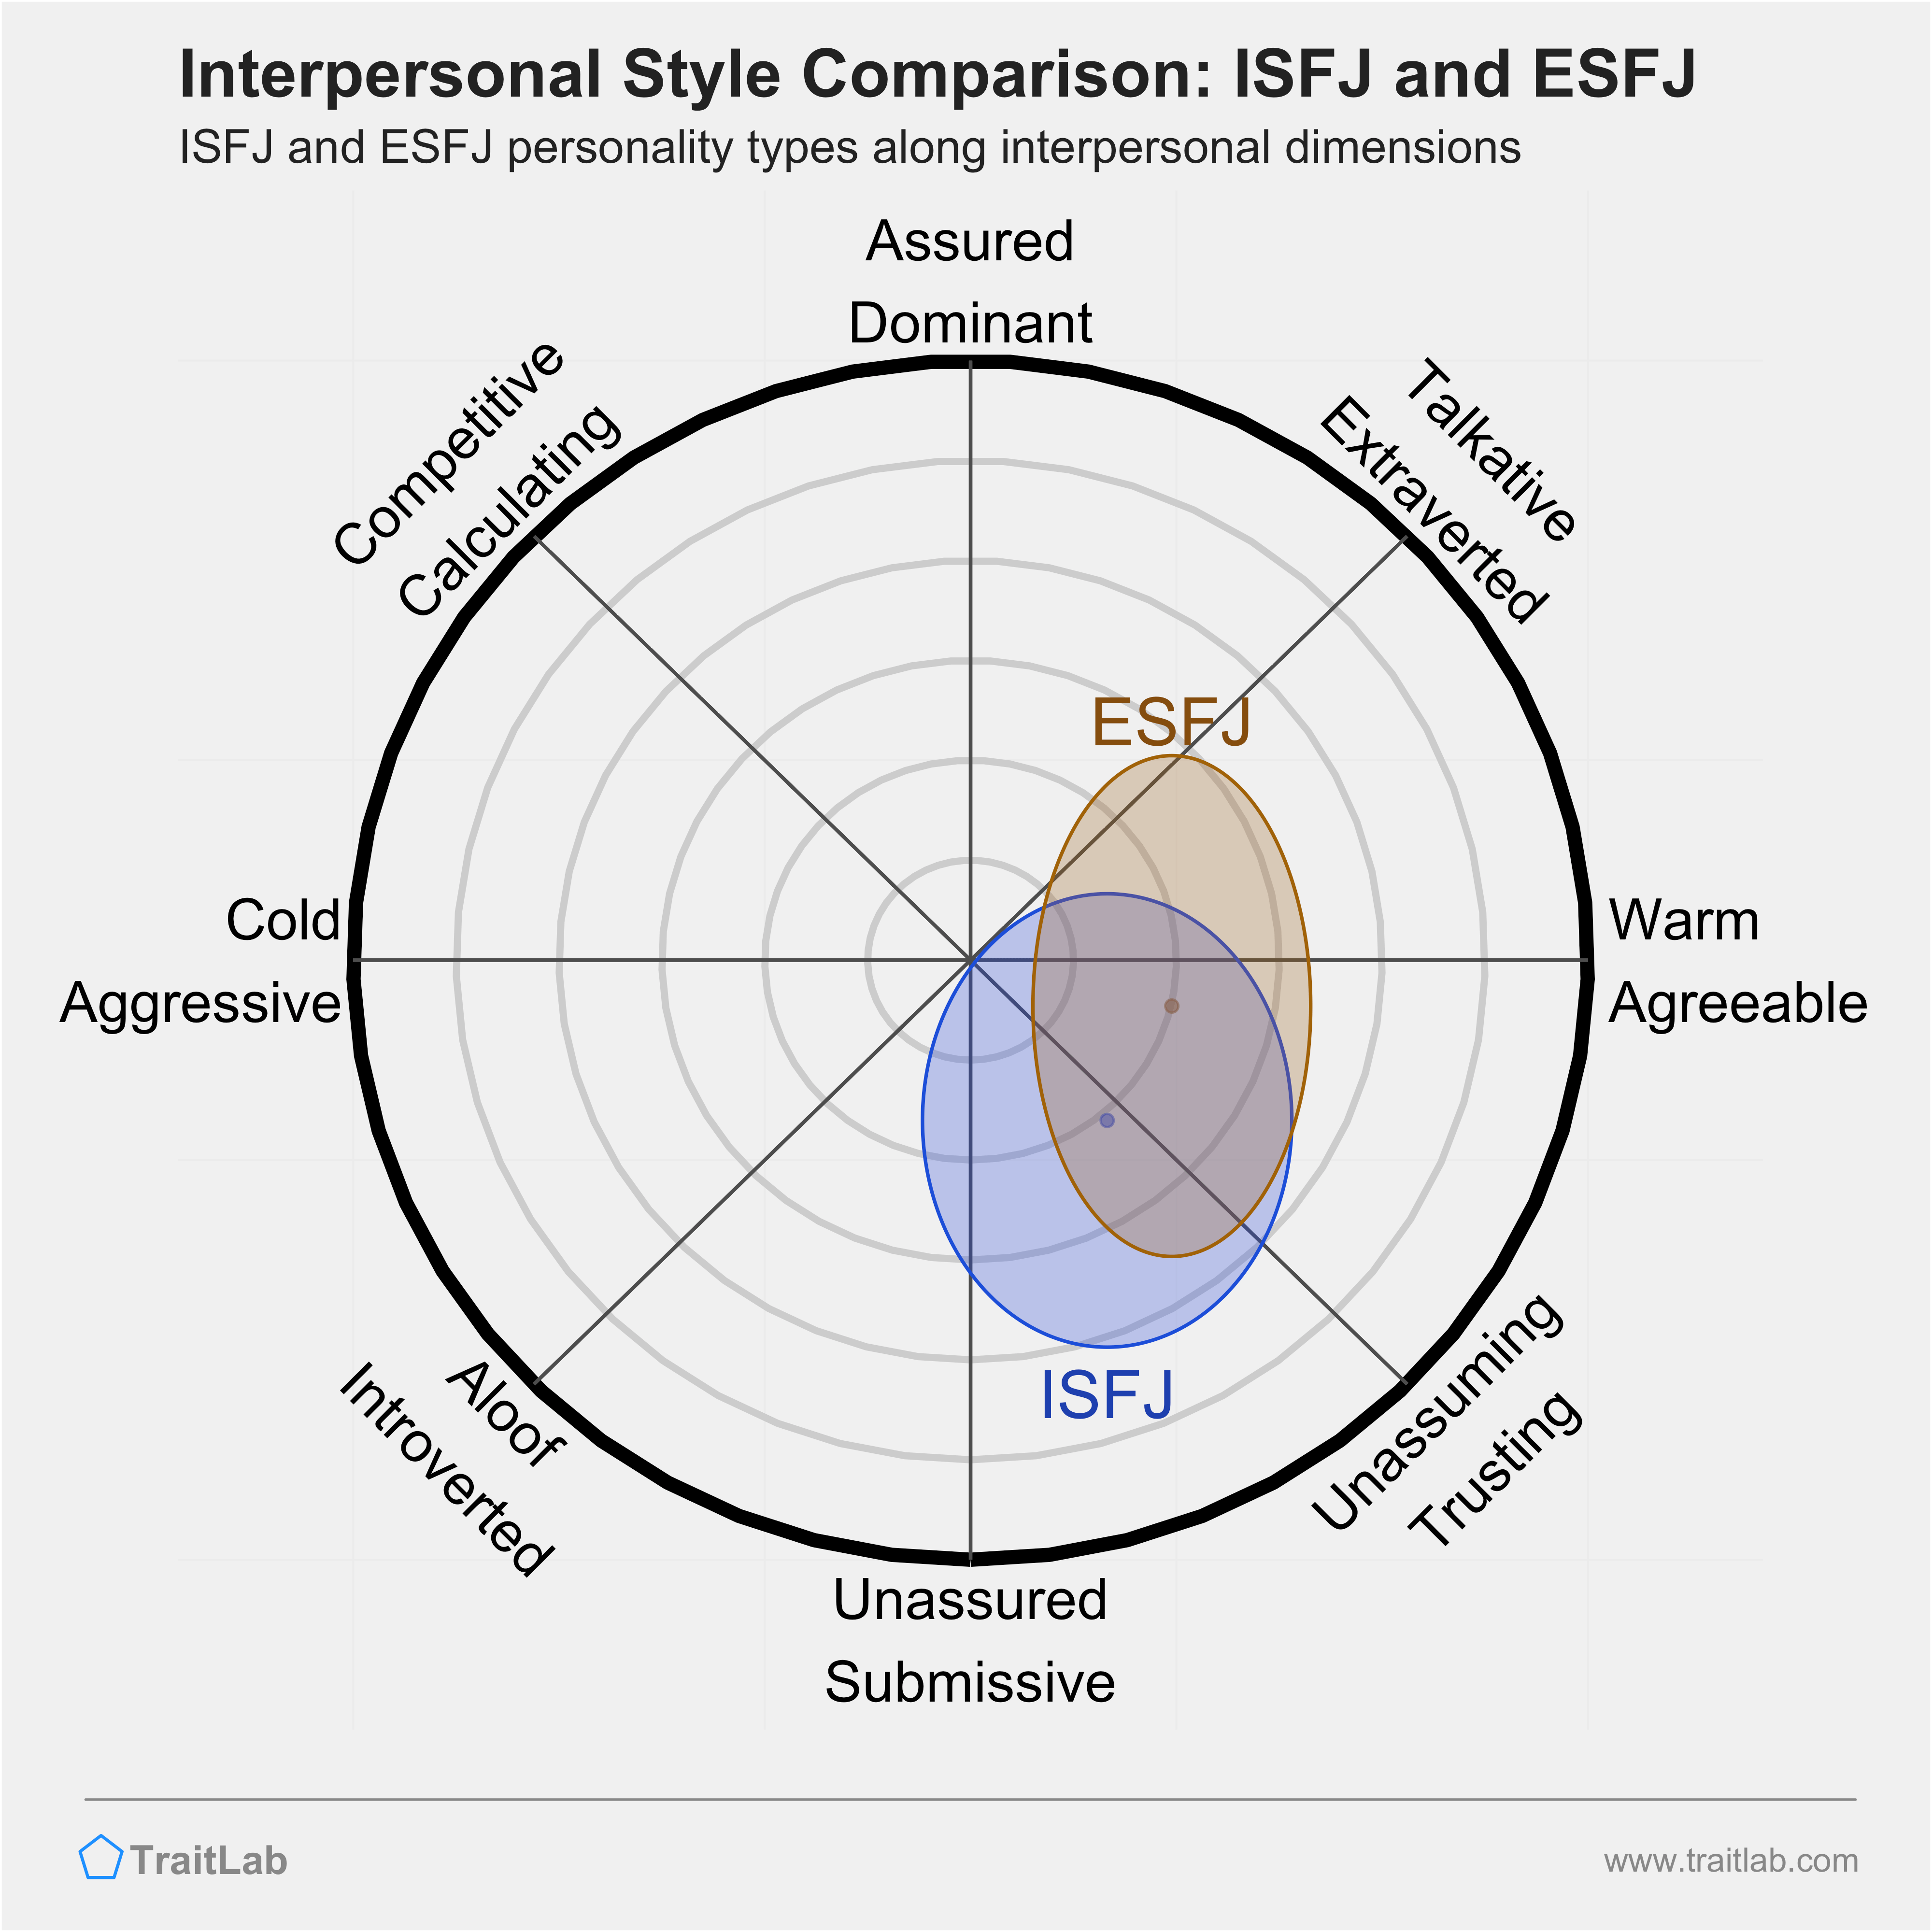 ISFJ and ESFJ comparison across interpersonal dimensions